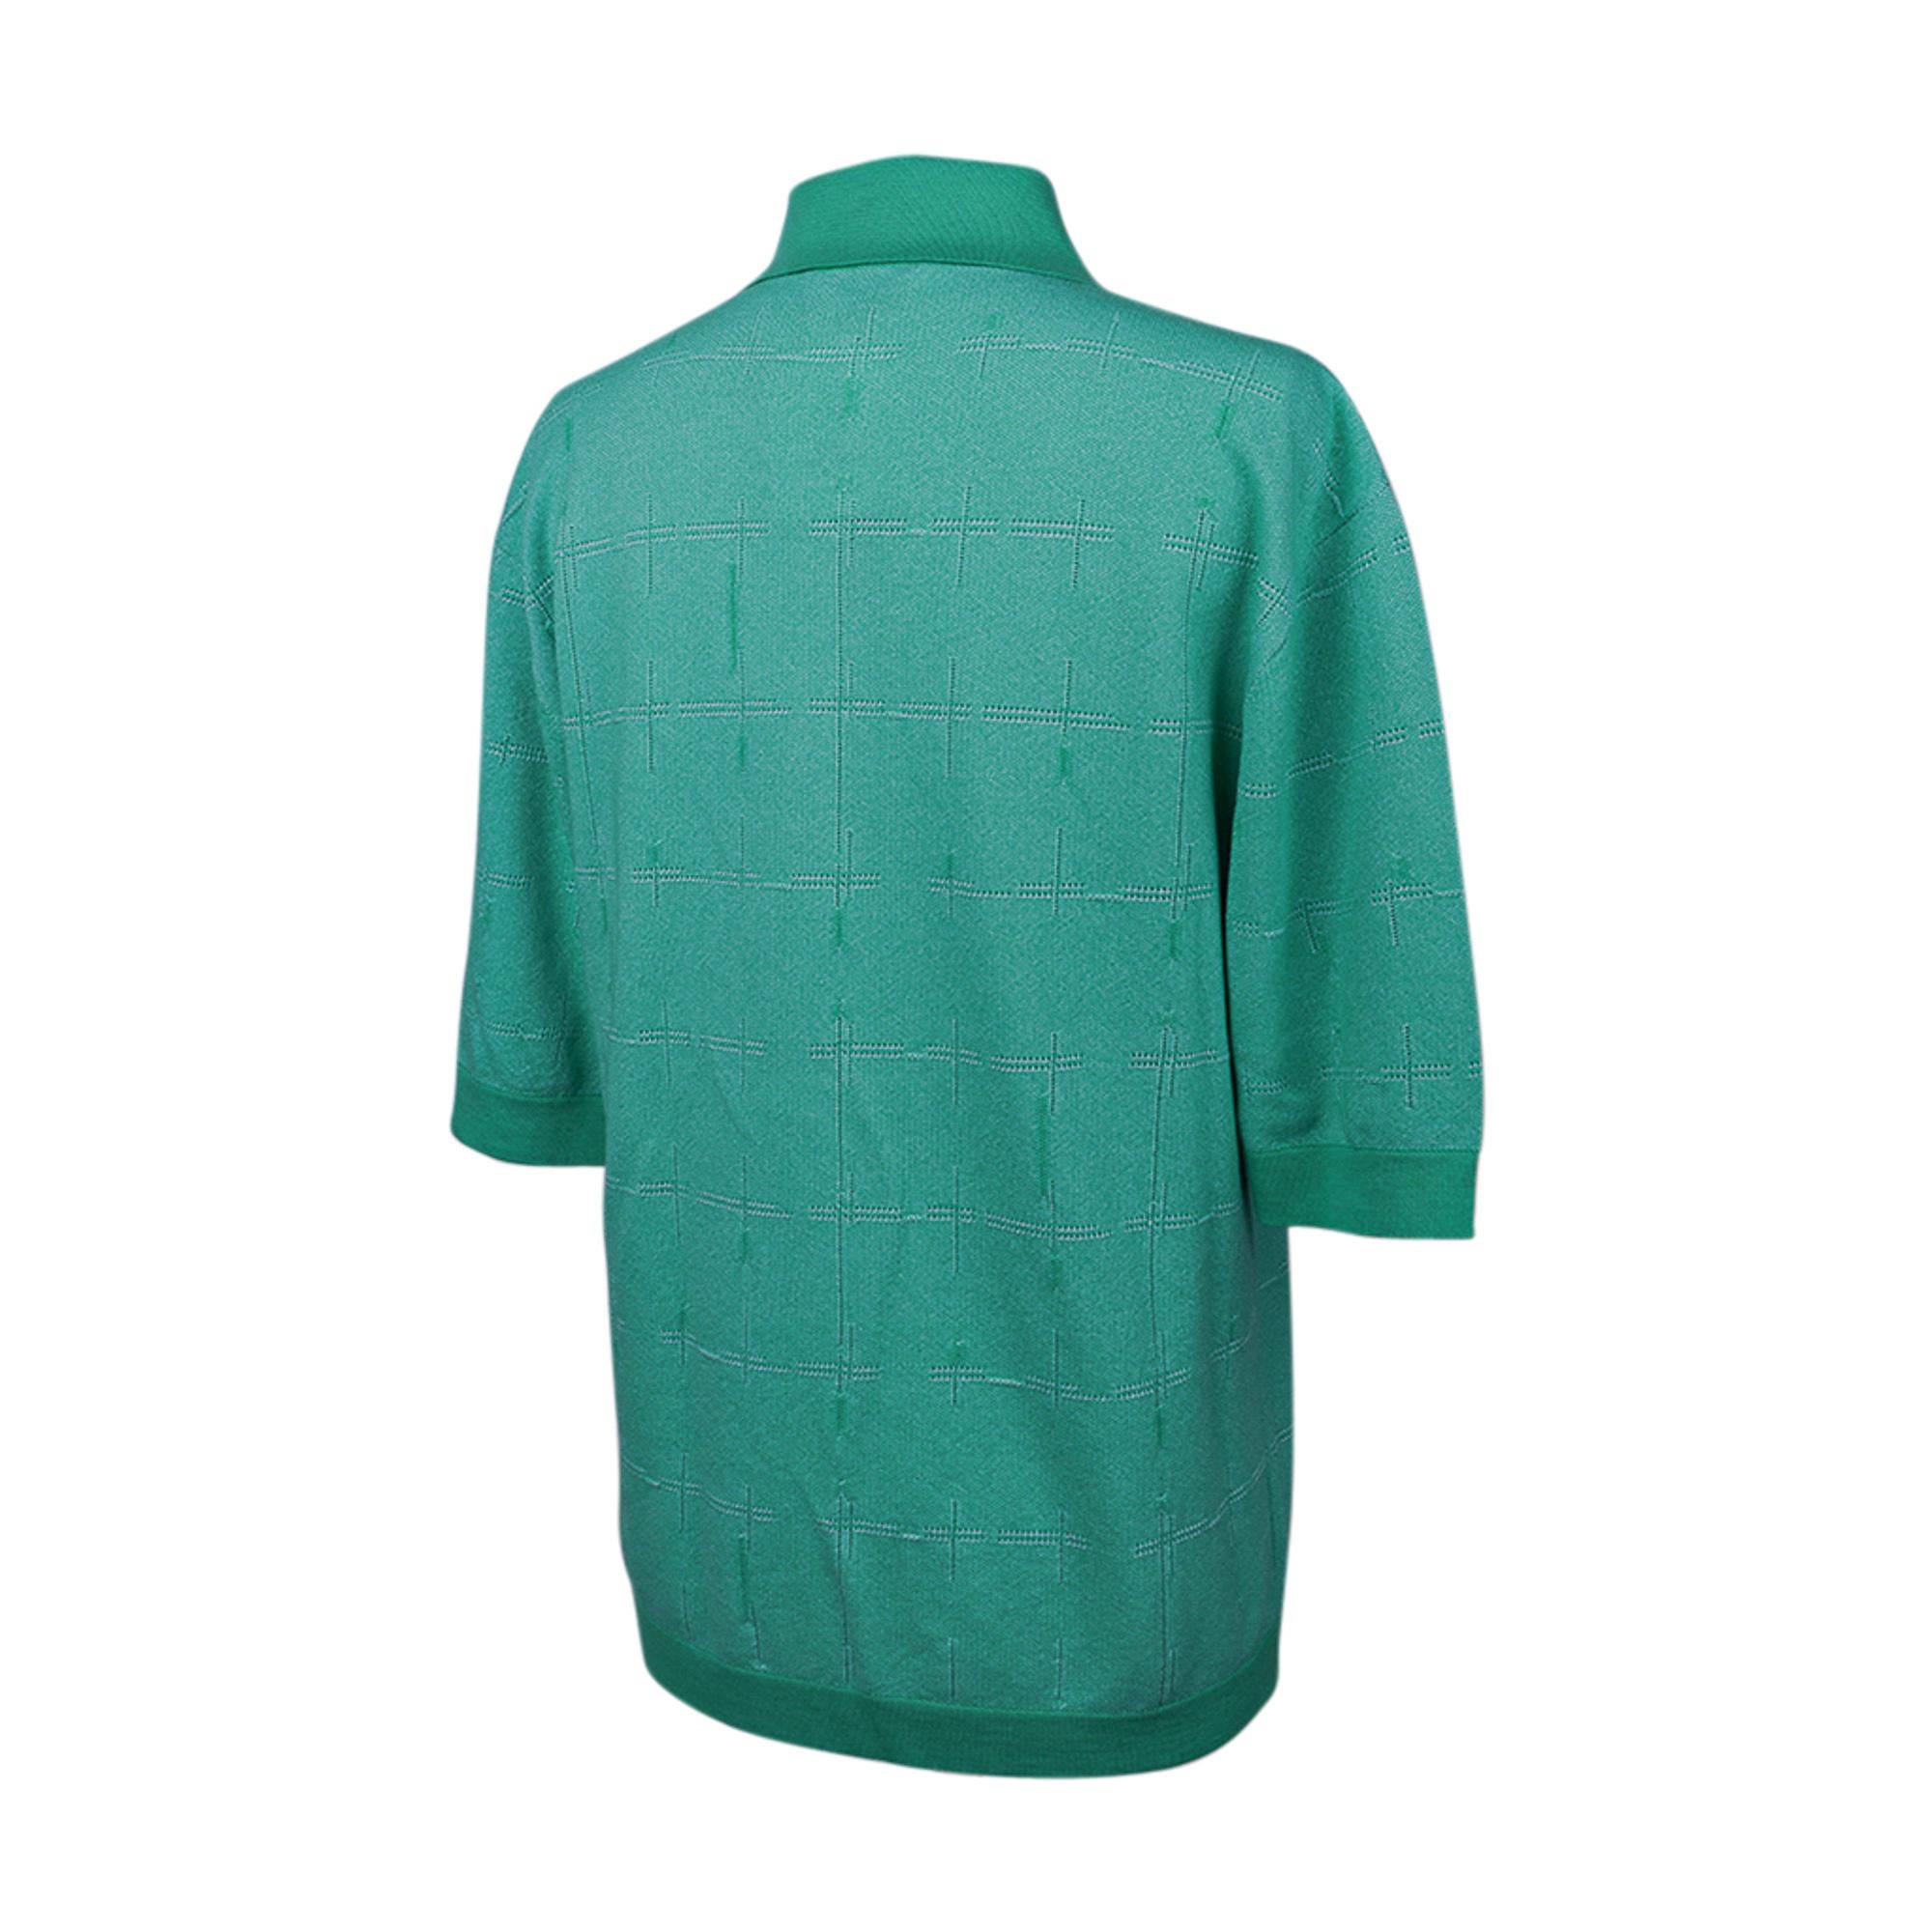 Hermes Men's H en Carreaux Boxy Fit Polo Shirt Vert Tendre Short Sleeve M For Sale 1